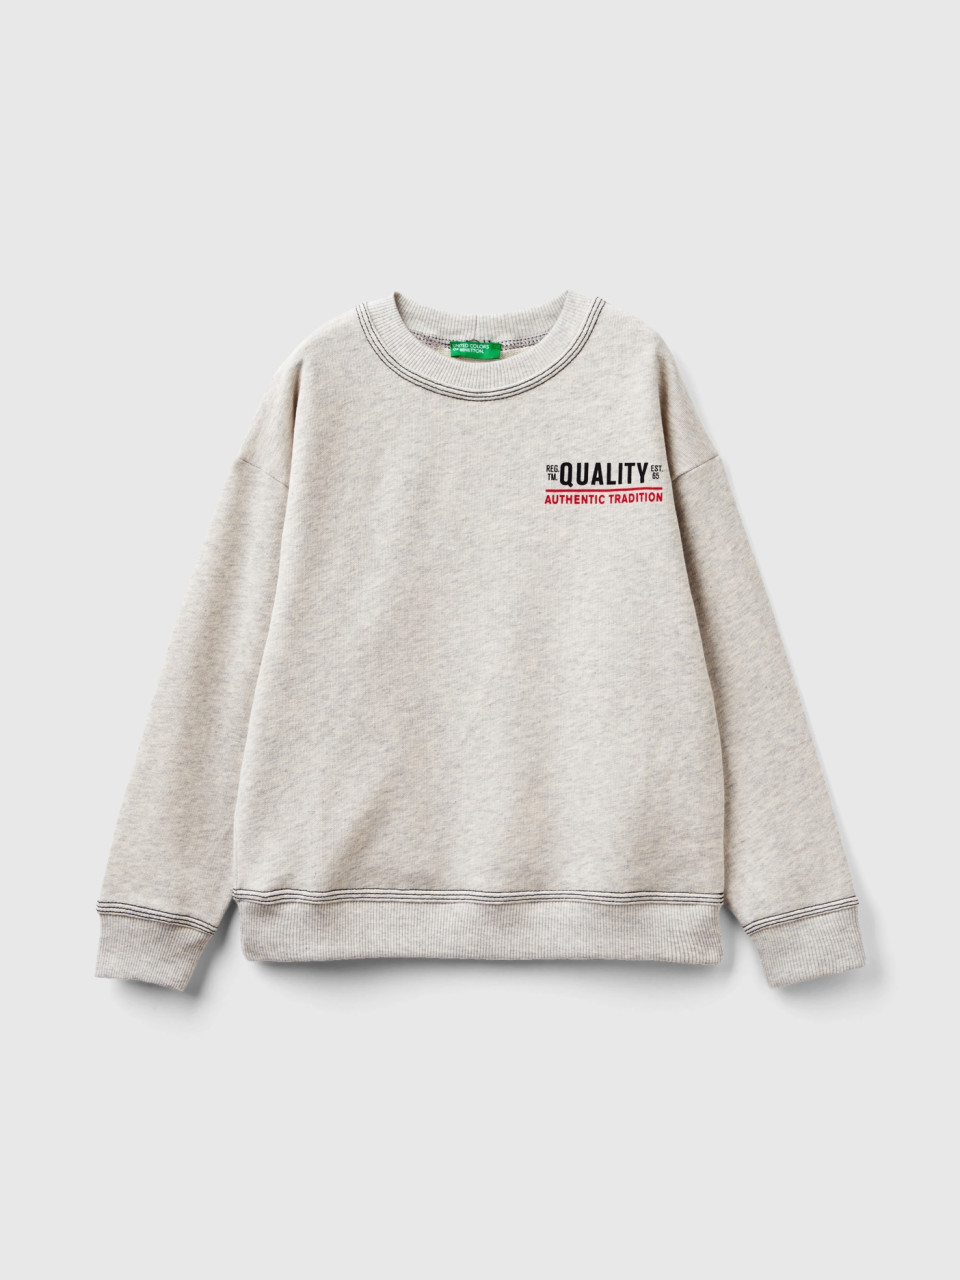 Benetton, Oversized Sweatshirt With Print, Light Gray, Kids